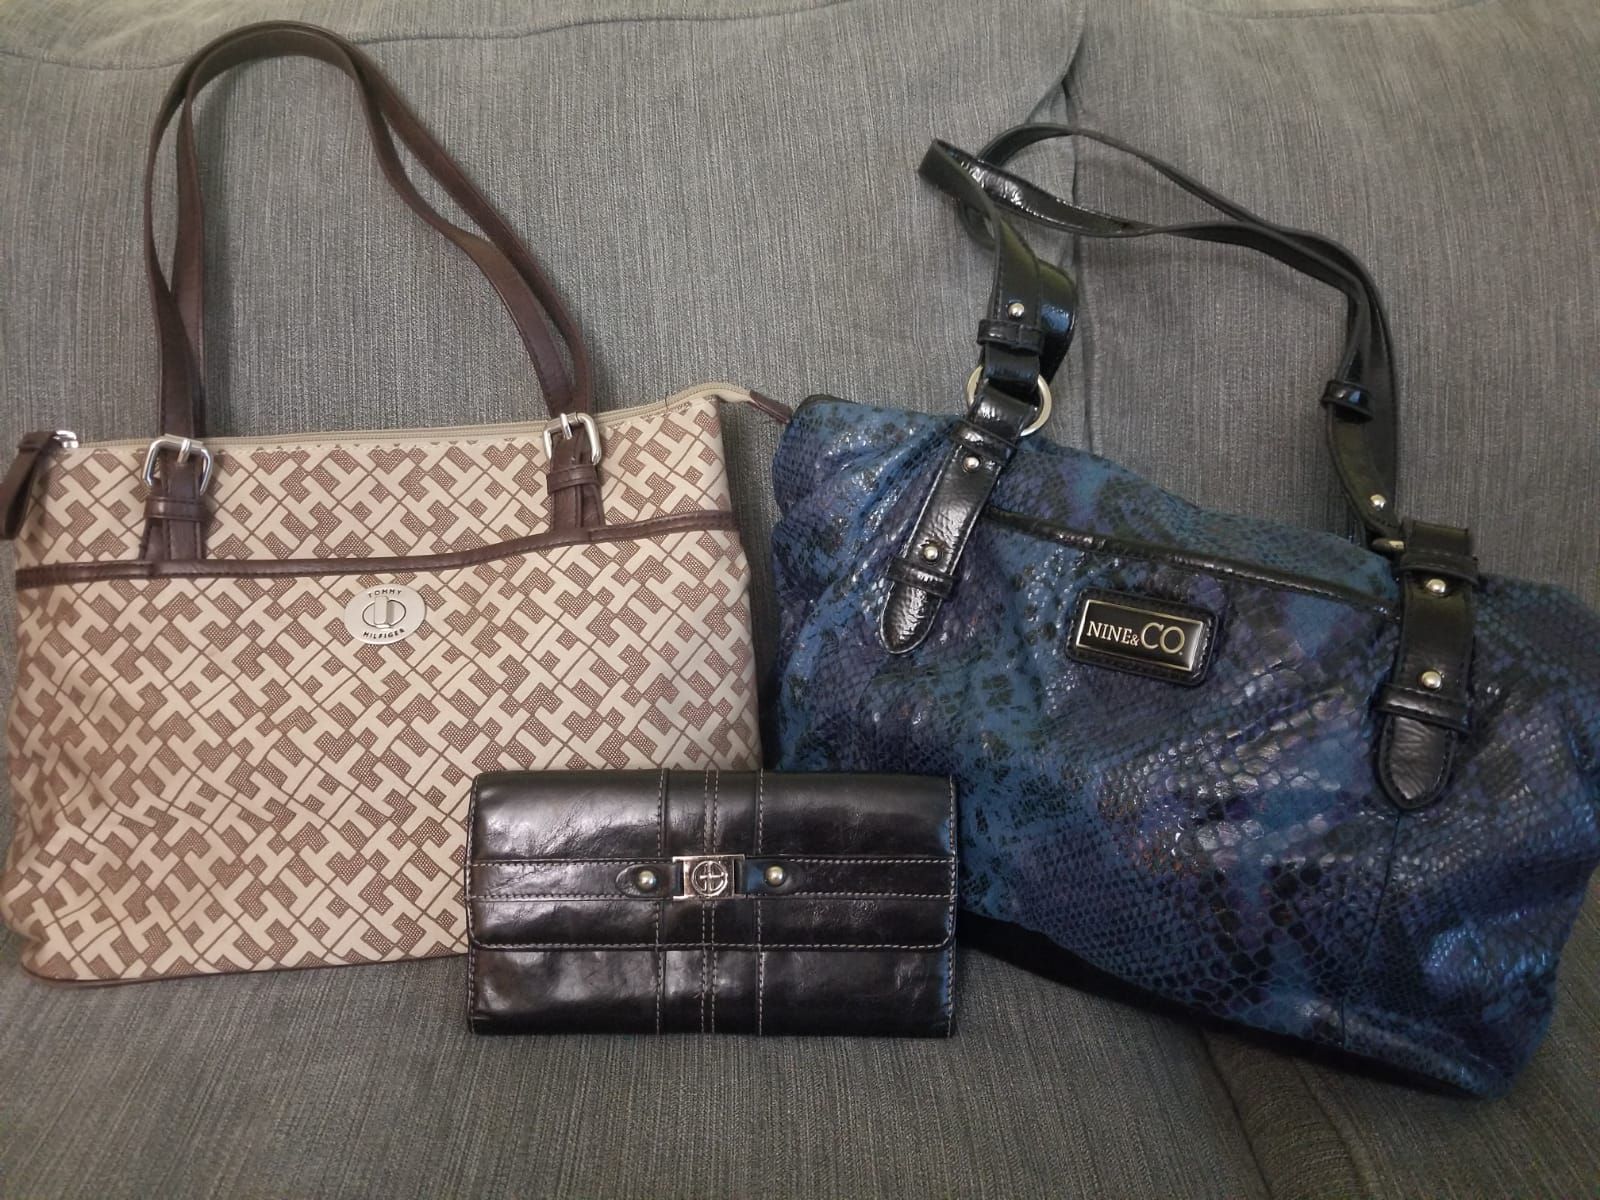 Tommy Hilfiger, Nine west and Giani Bernini women's purse